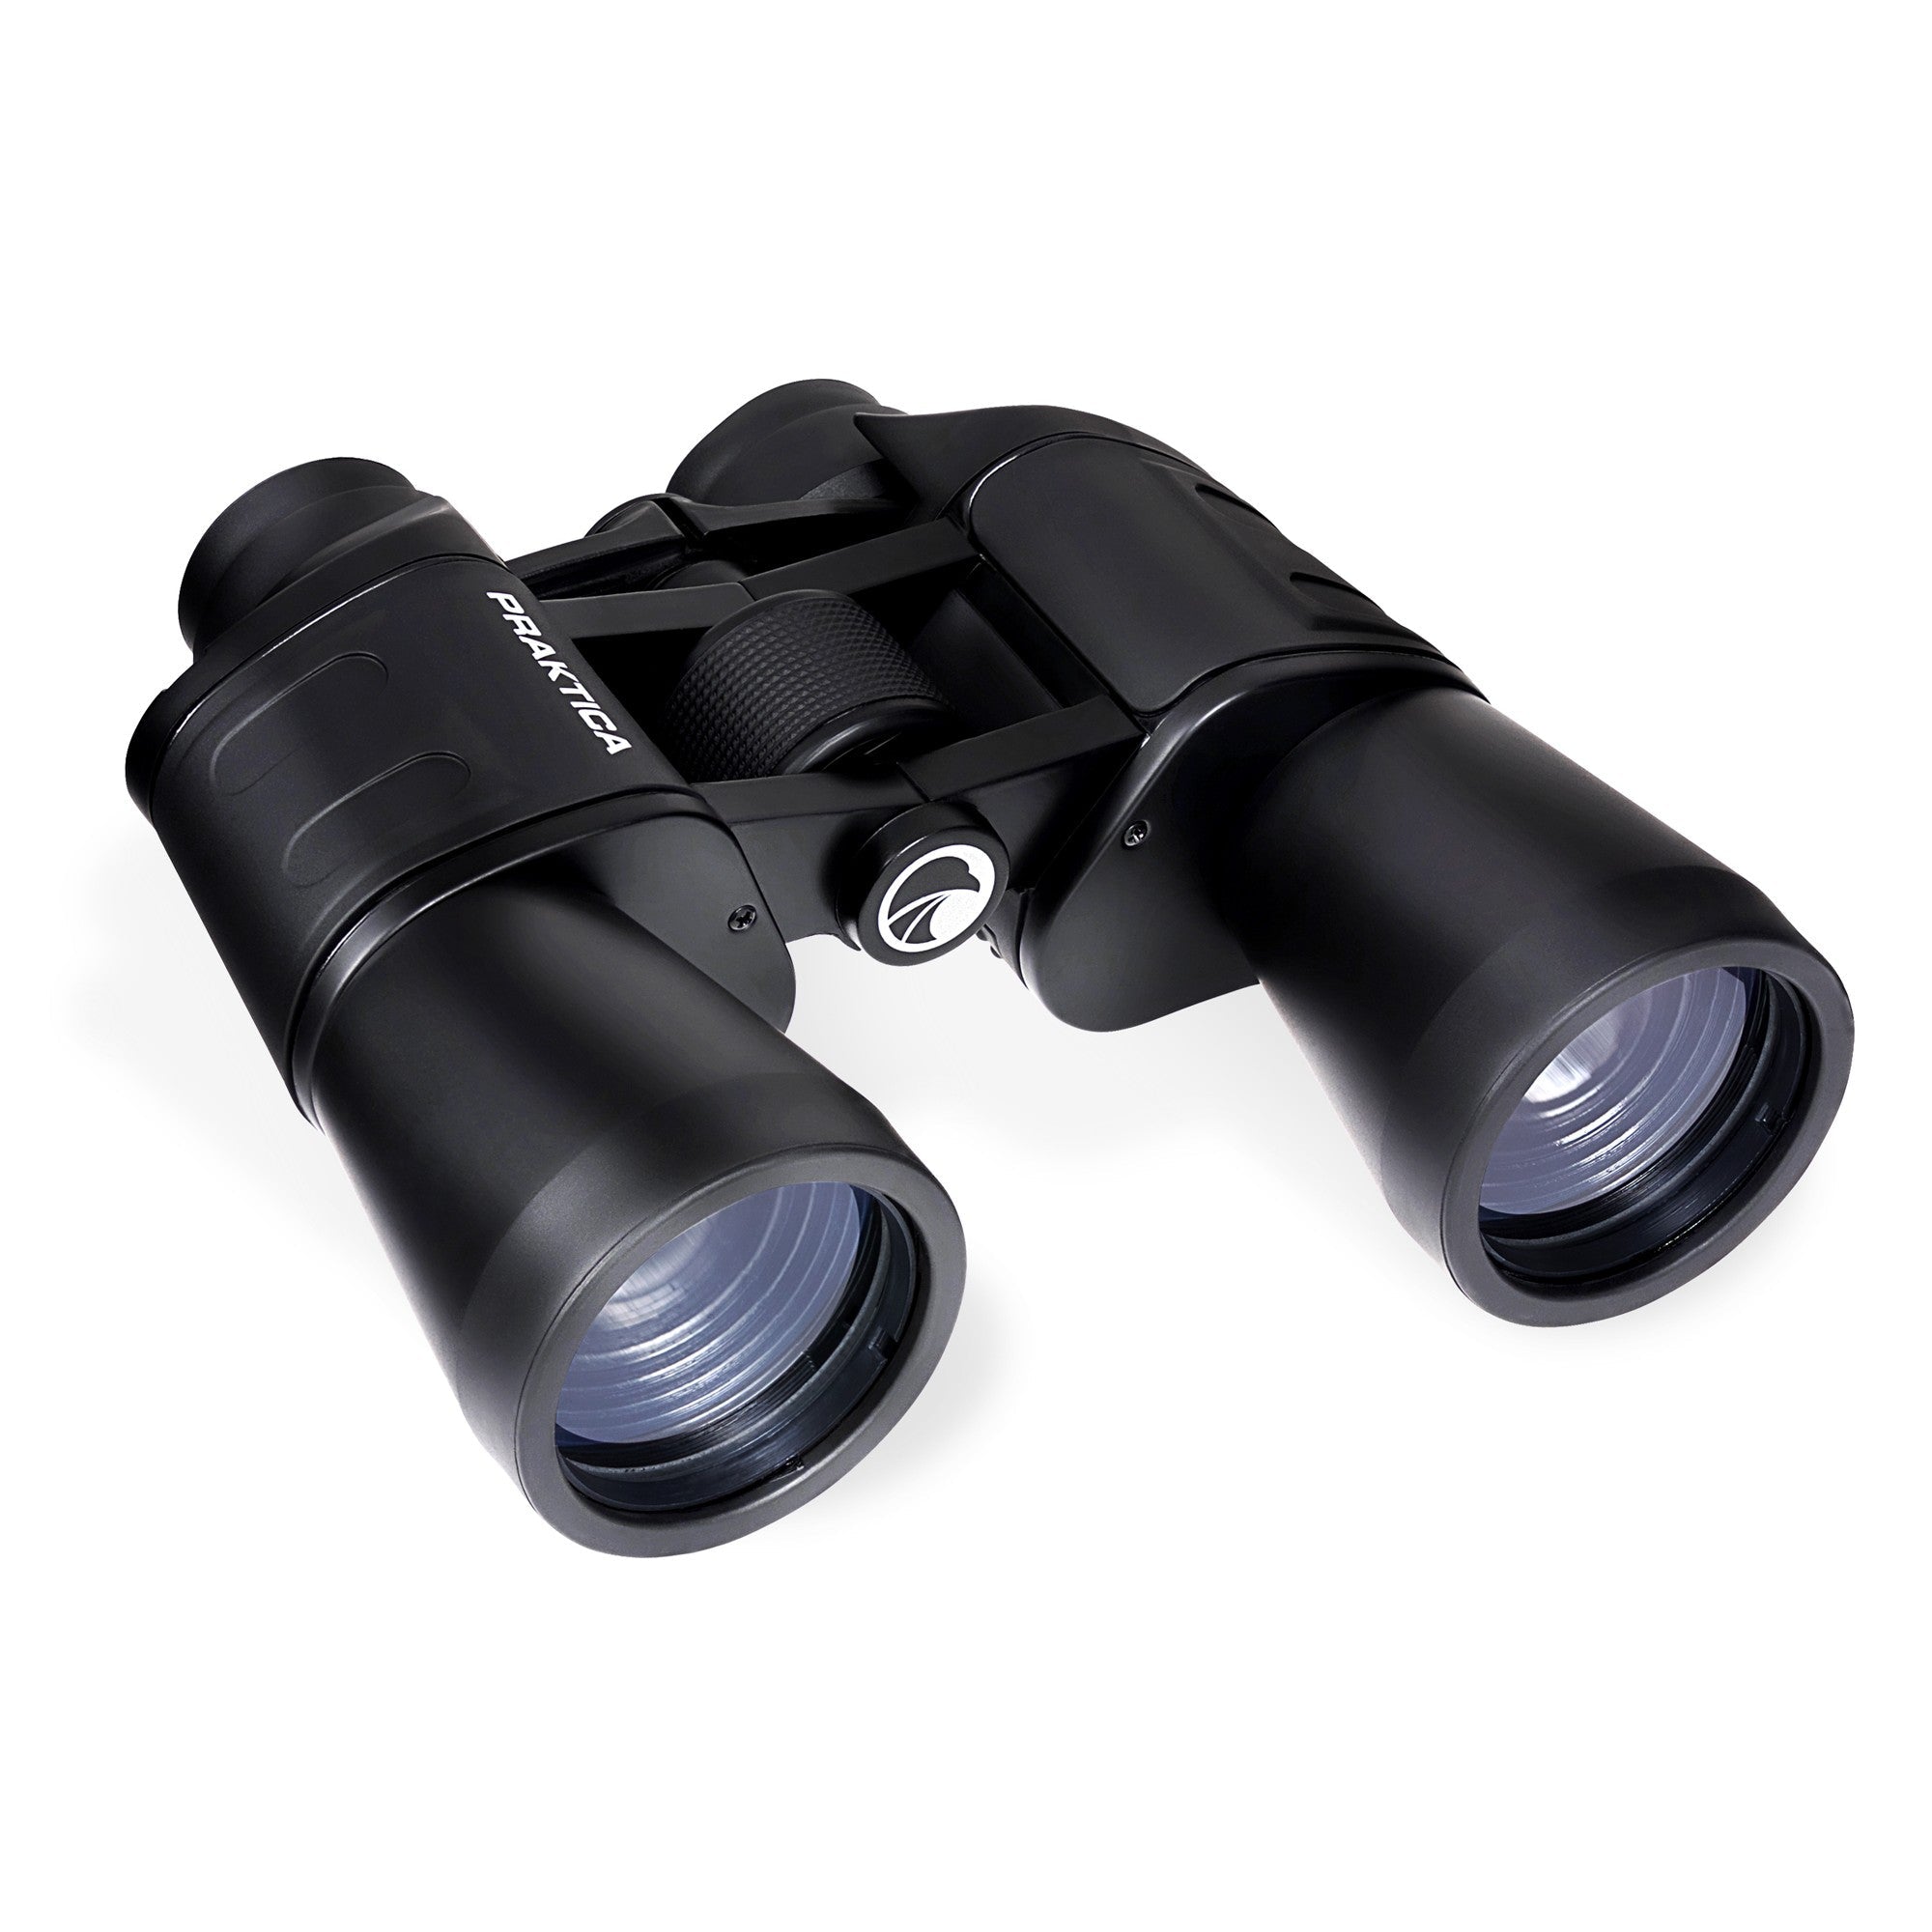 PRAKTICA Falcon 7x50mm Porro Prism Field Binoculars - Black (Binoculars Only)